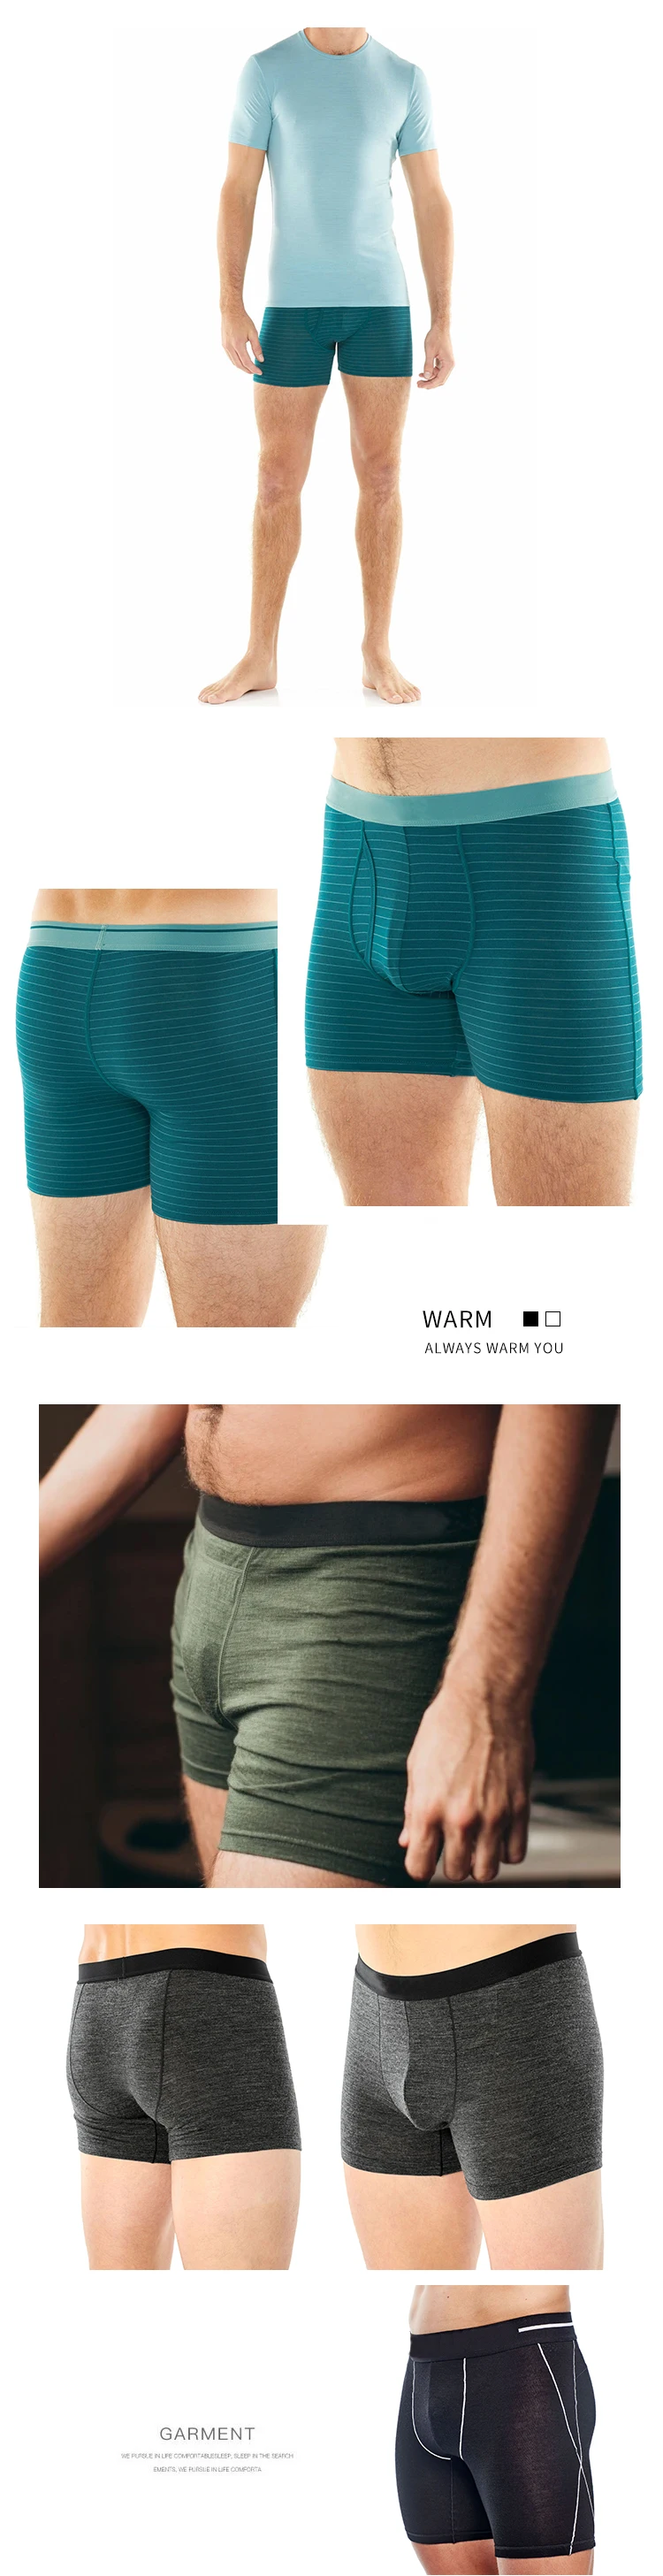 eneurp custom quality merino wool cotton celana dalam anak pria wanita pendek underwear boxer shorts briefs for men's